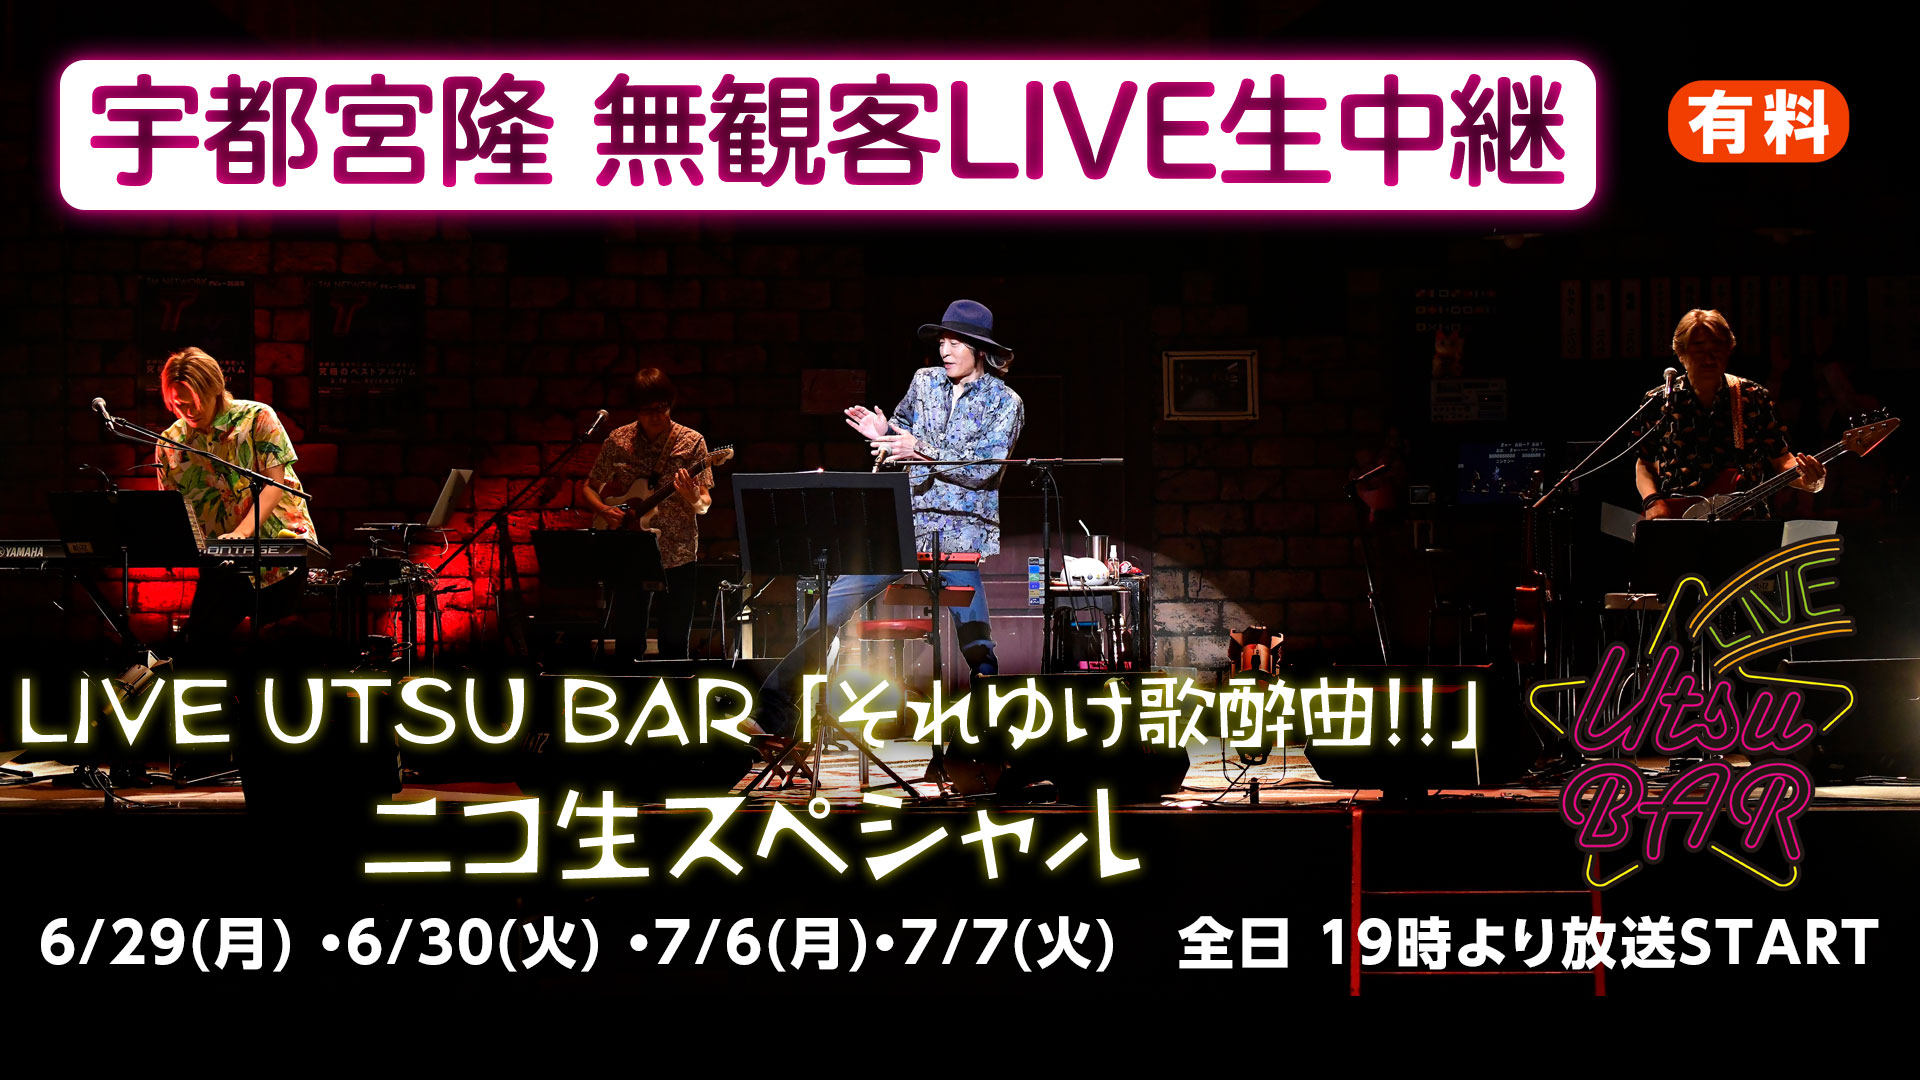 Live Utsu Bar それゆけ歌酔曲 ニコ生スペシャル3 ニコ生スペシャル4 無観客live生中継決定